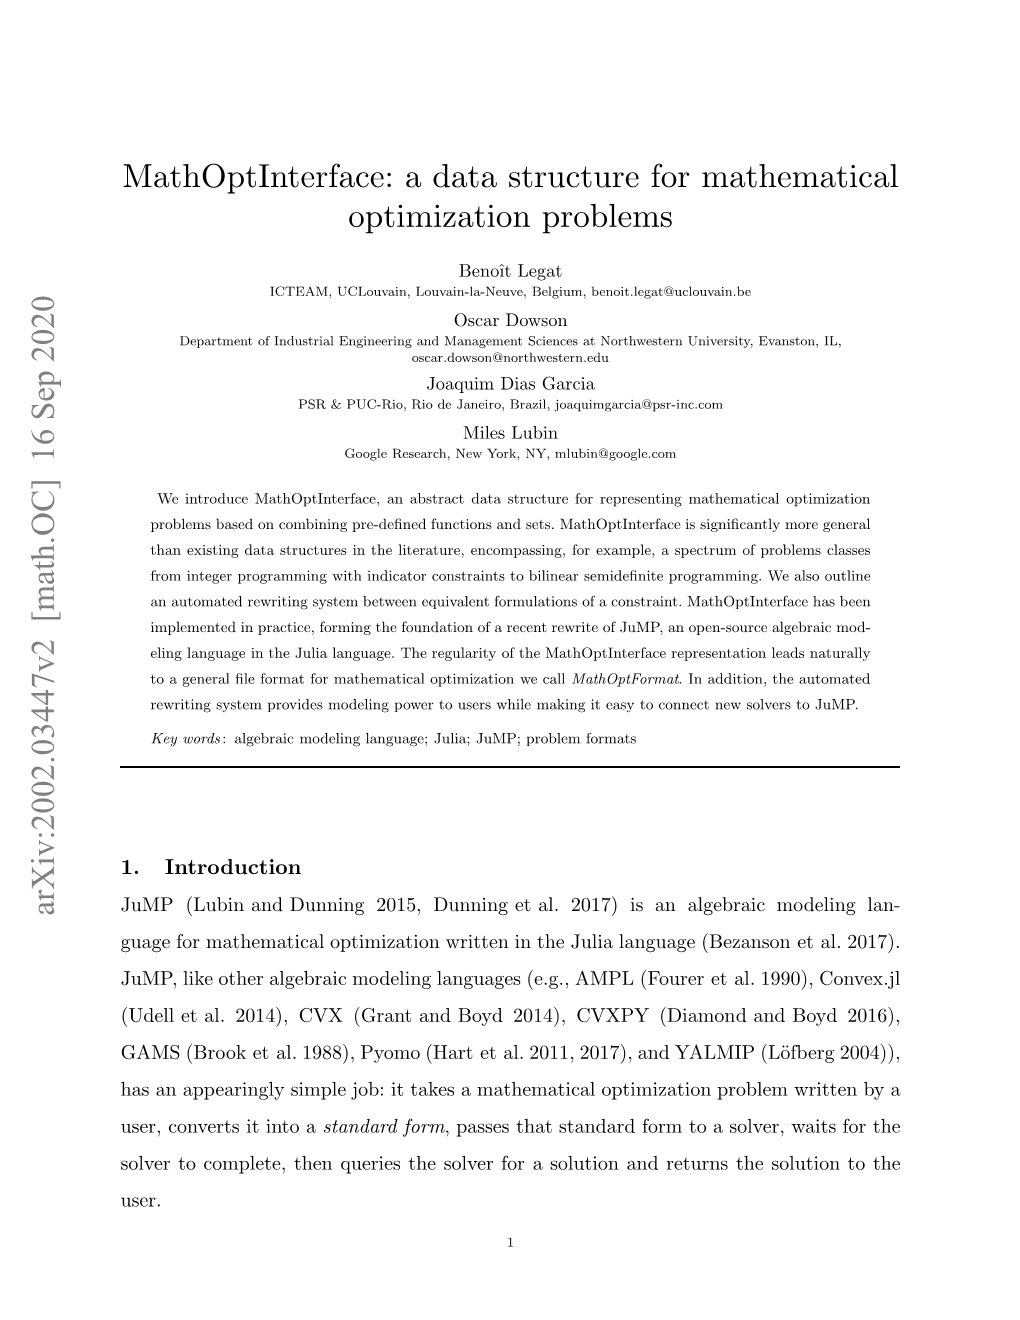 Mathoptinterface: a Data Structure for Mathematical Optimization Problems 2